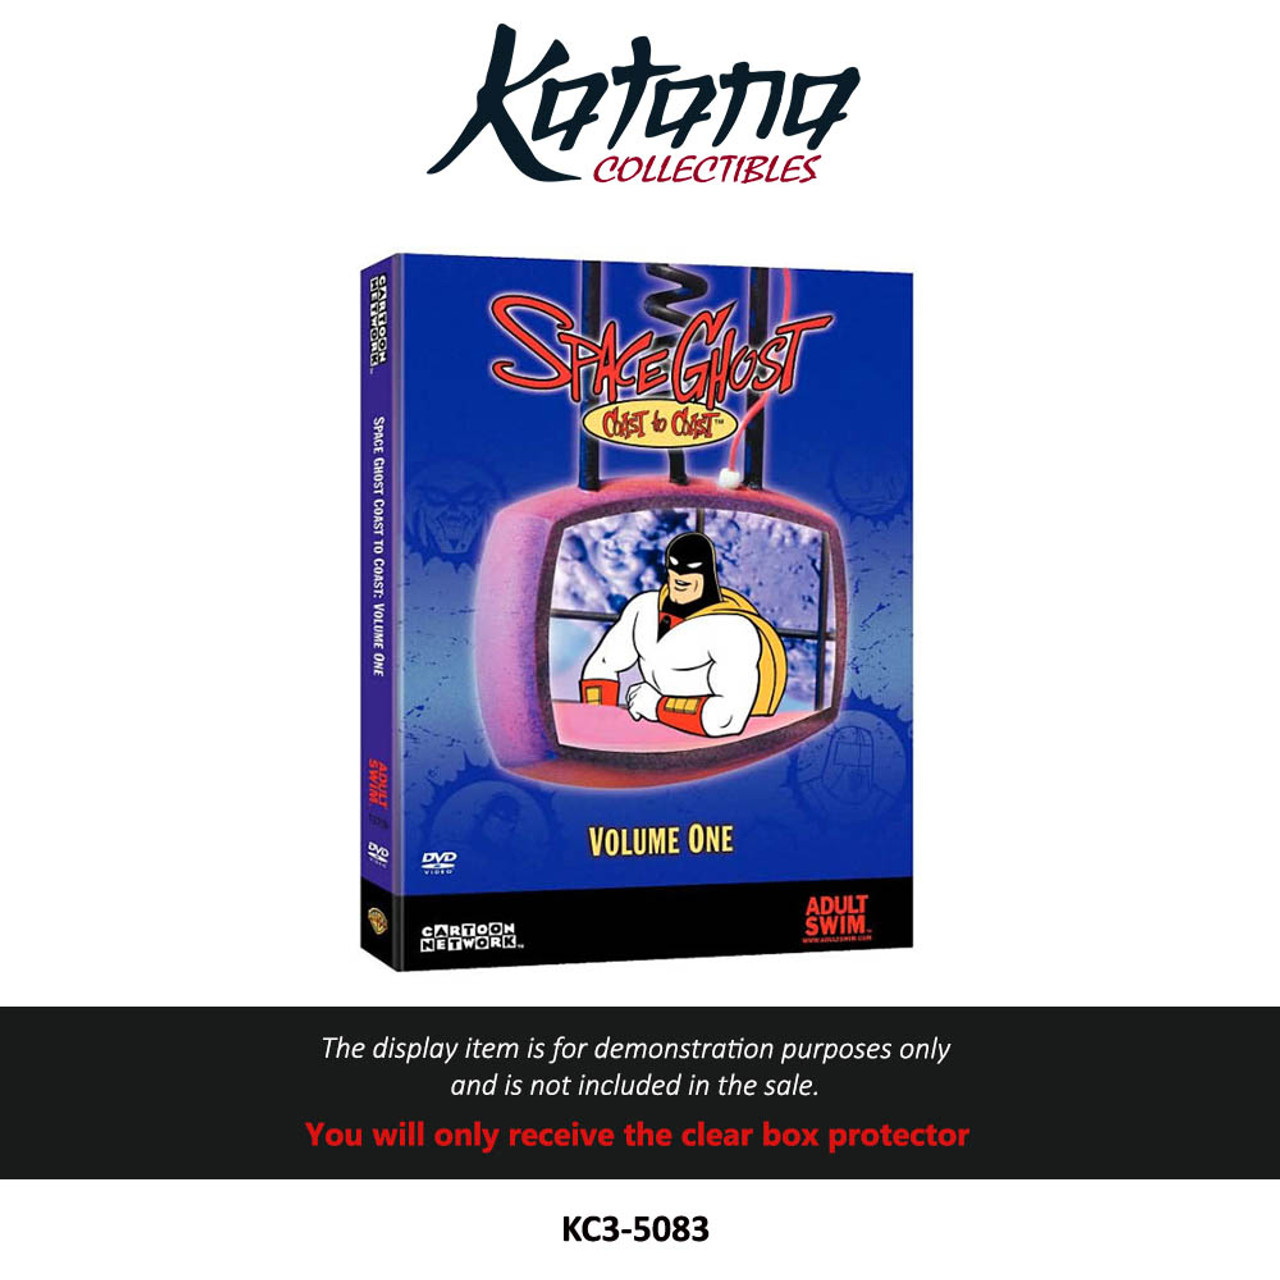 Katana Collectibles Protector For Adult Swim DVD